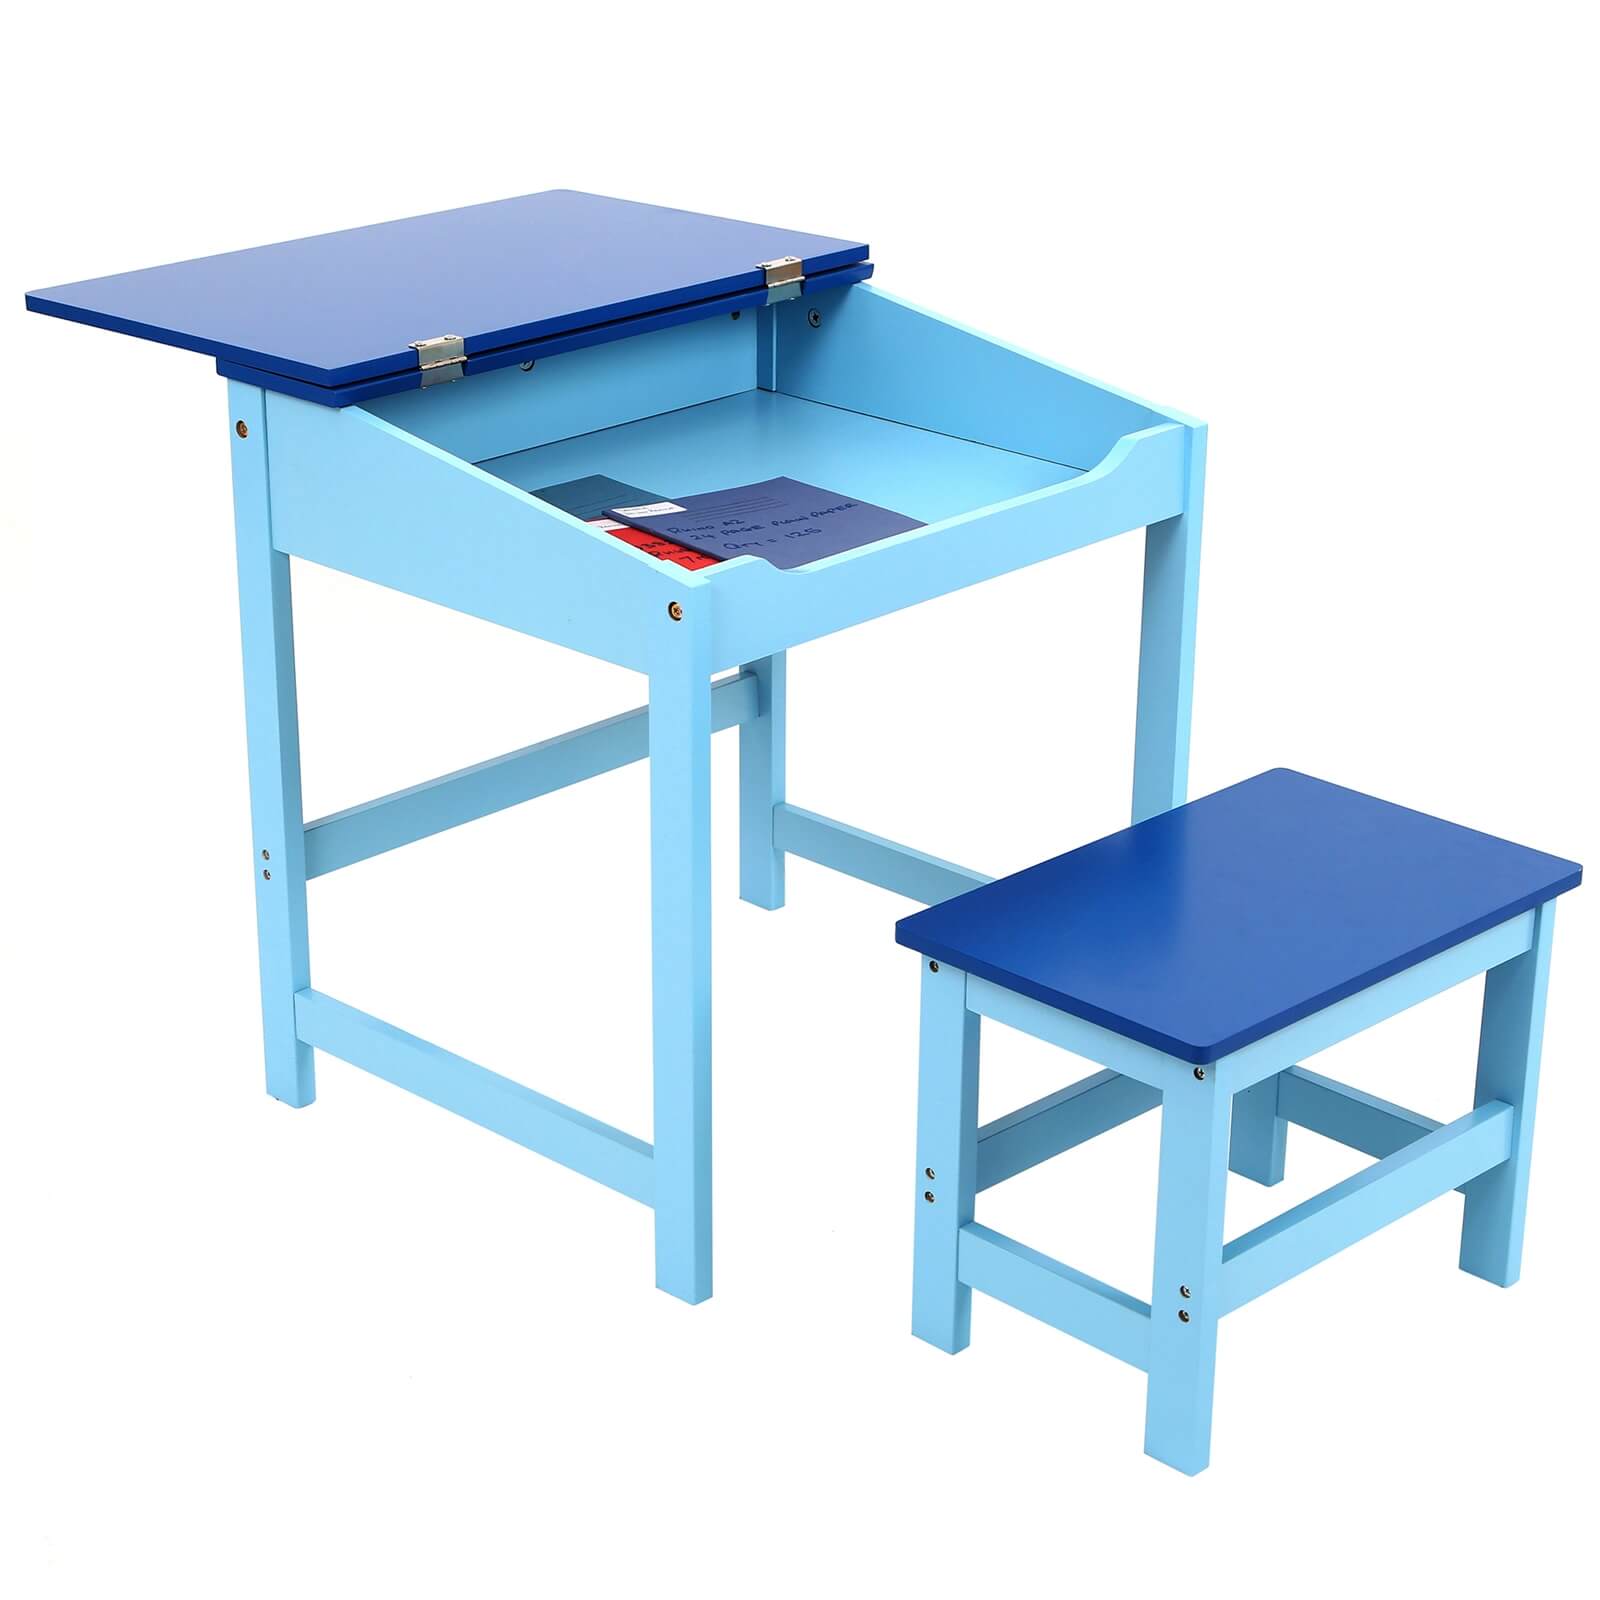 Kids Desk and Stool - Blue